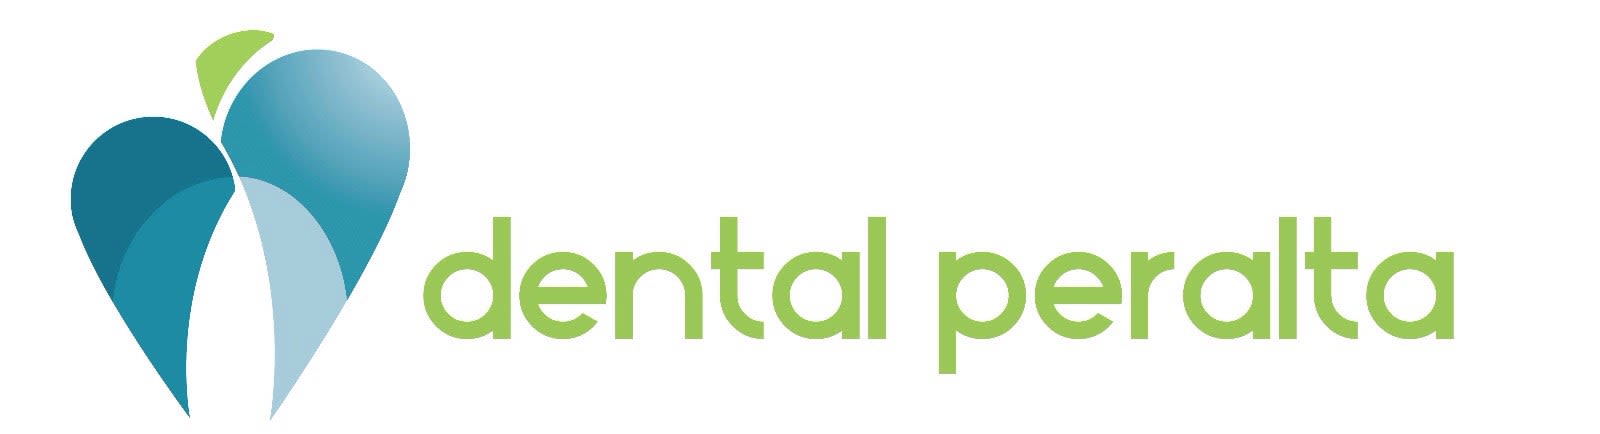 Dental Peralta